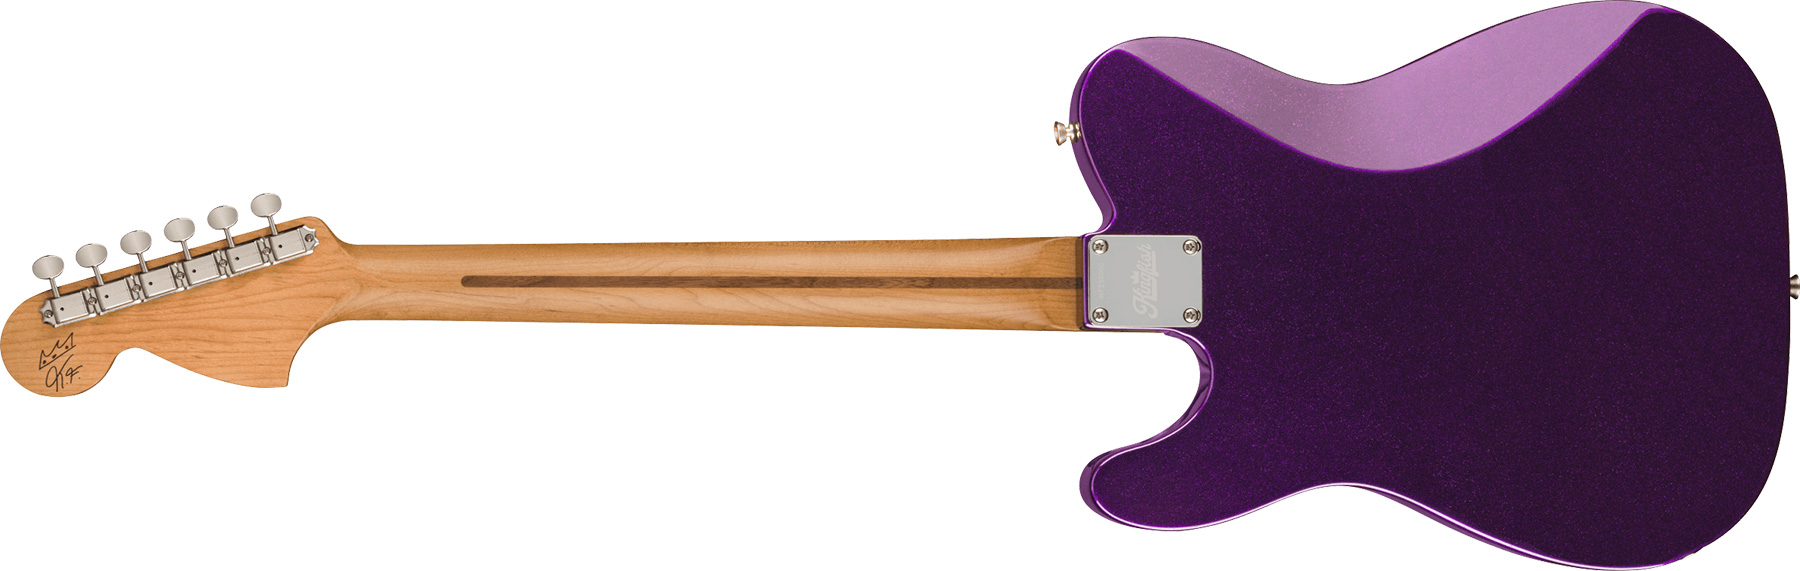 Fender Kingfish Tele Deluxe Usa Signature Hh Ht Rw - Mississippi Night - Guitarra eléctrica con forma de tel - Variation 1